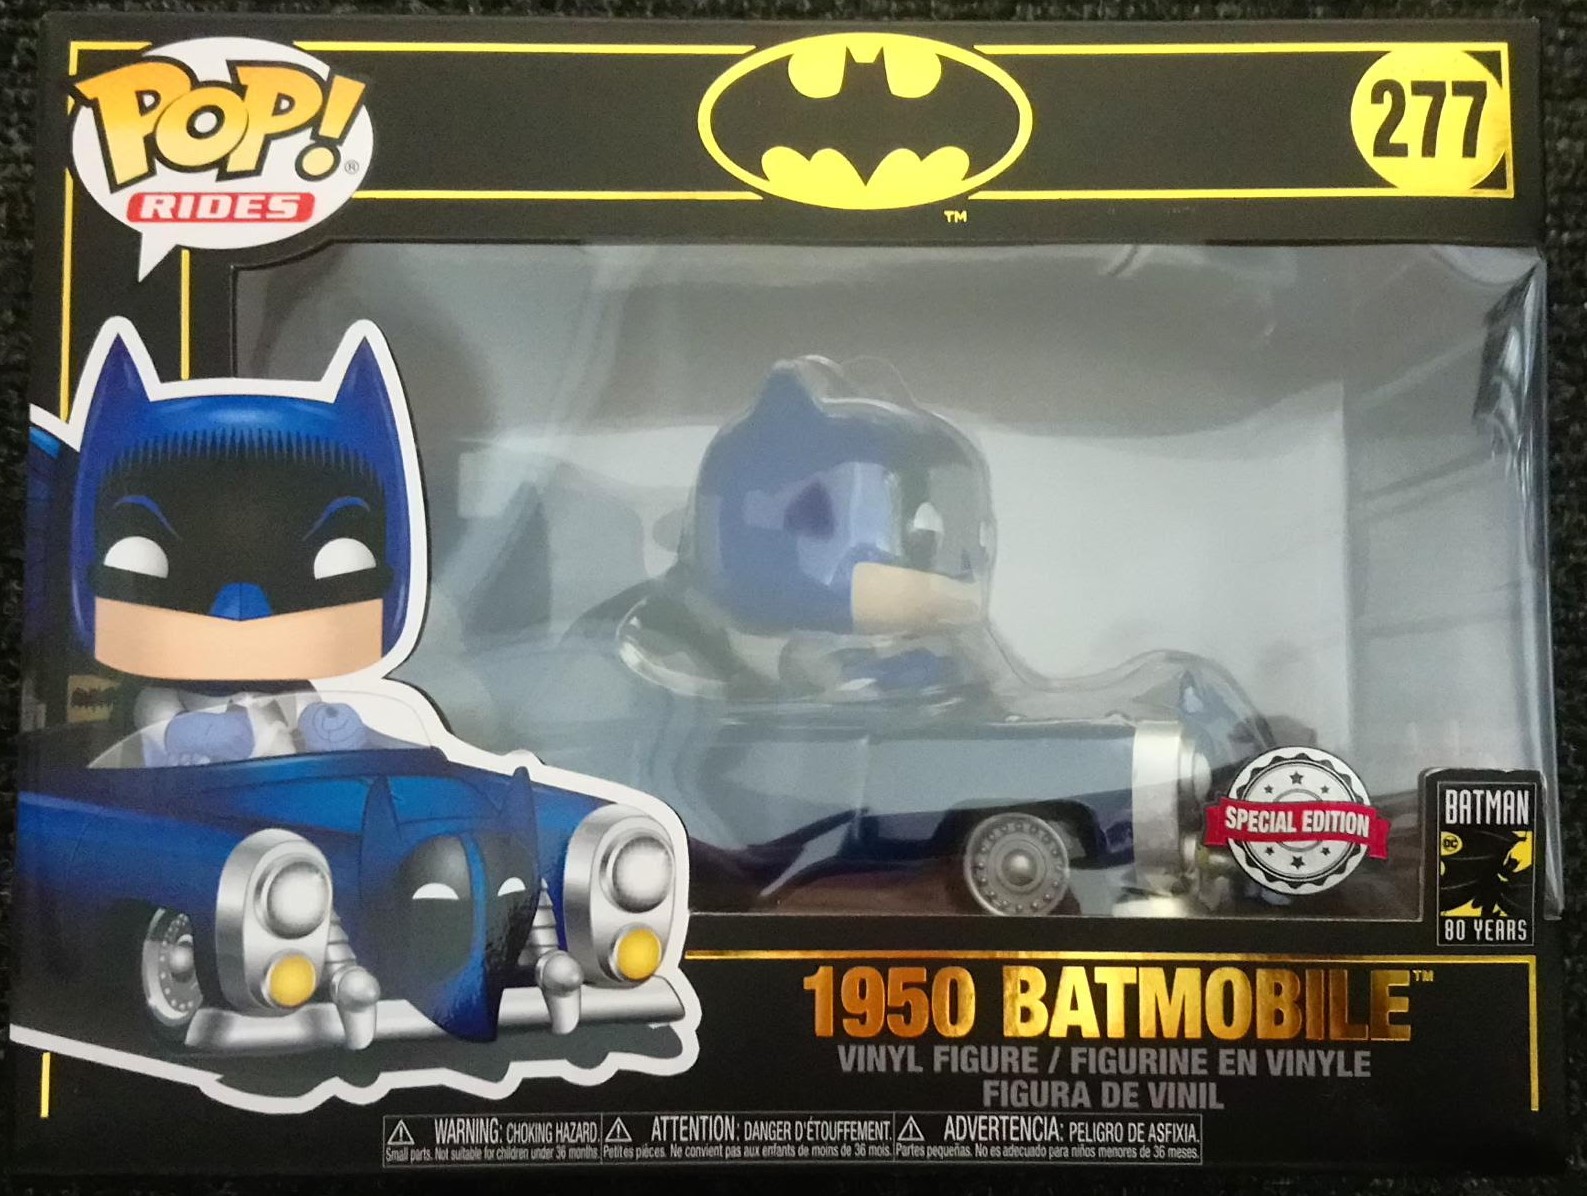 277 1950 Batmobile (Blue) - Metallic Pop Rides Batman 80th – Funko Pops